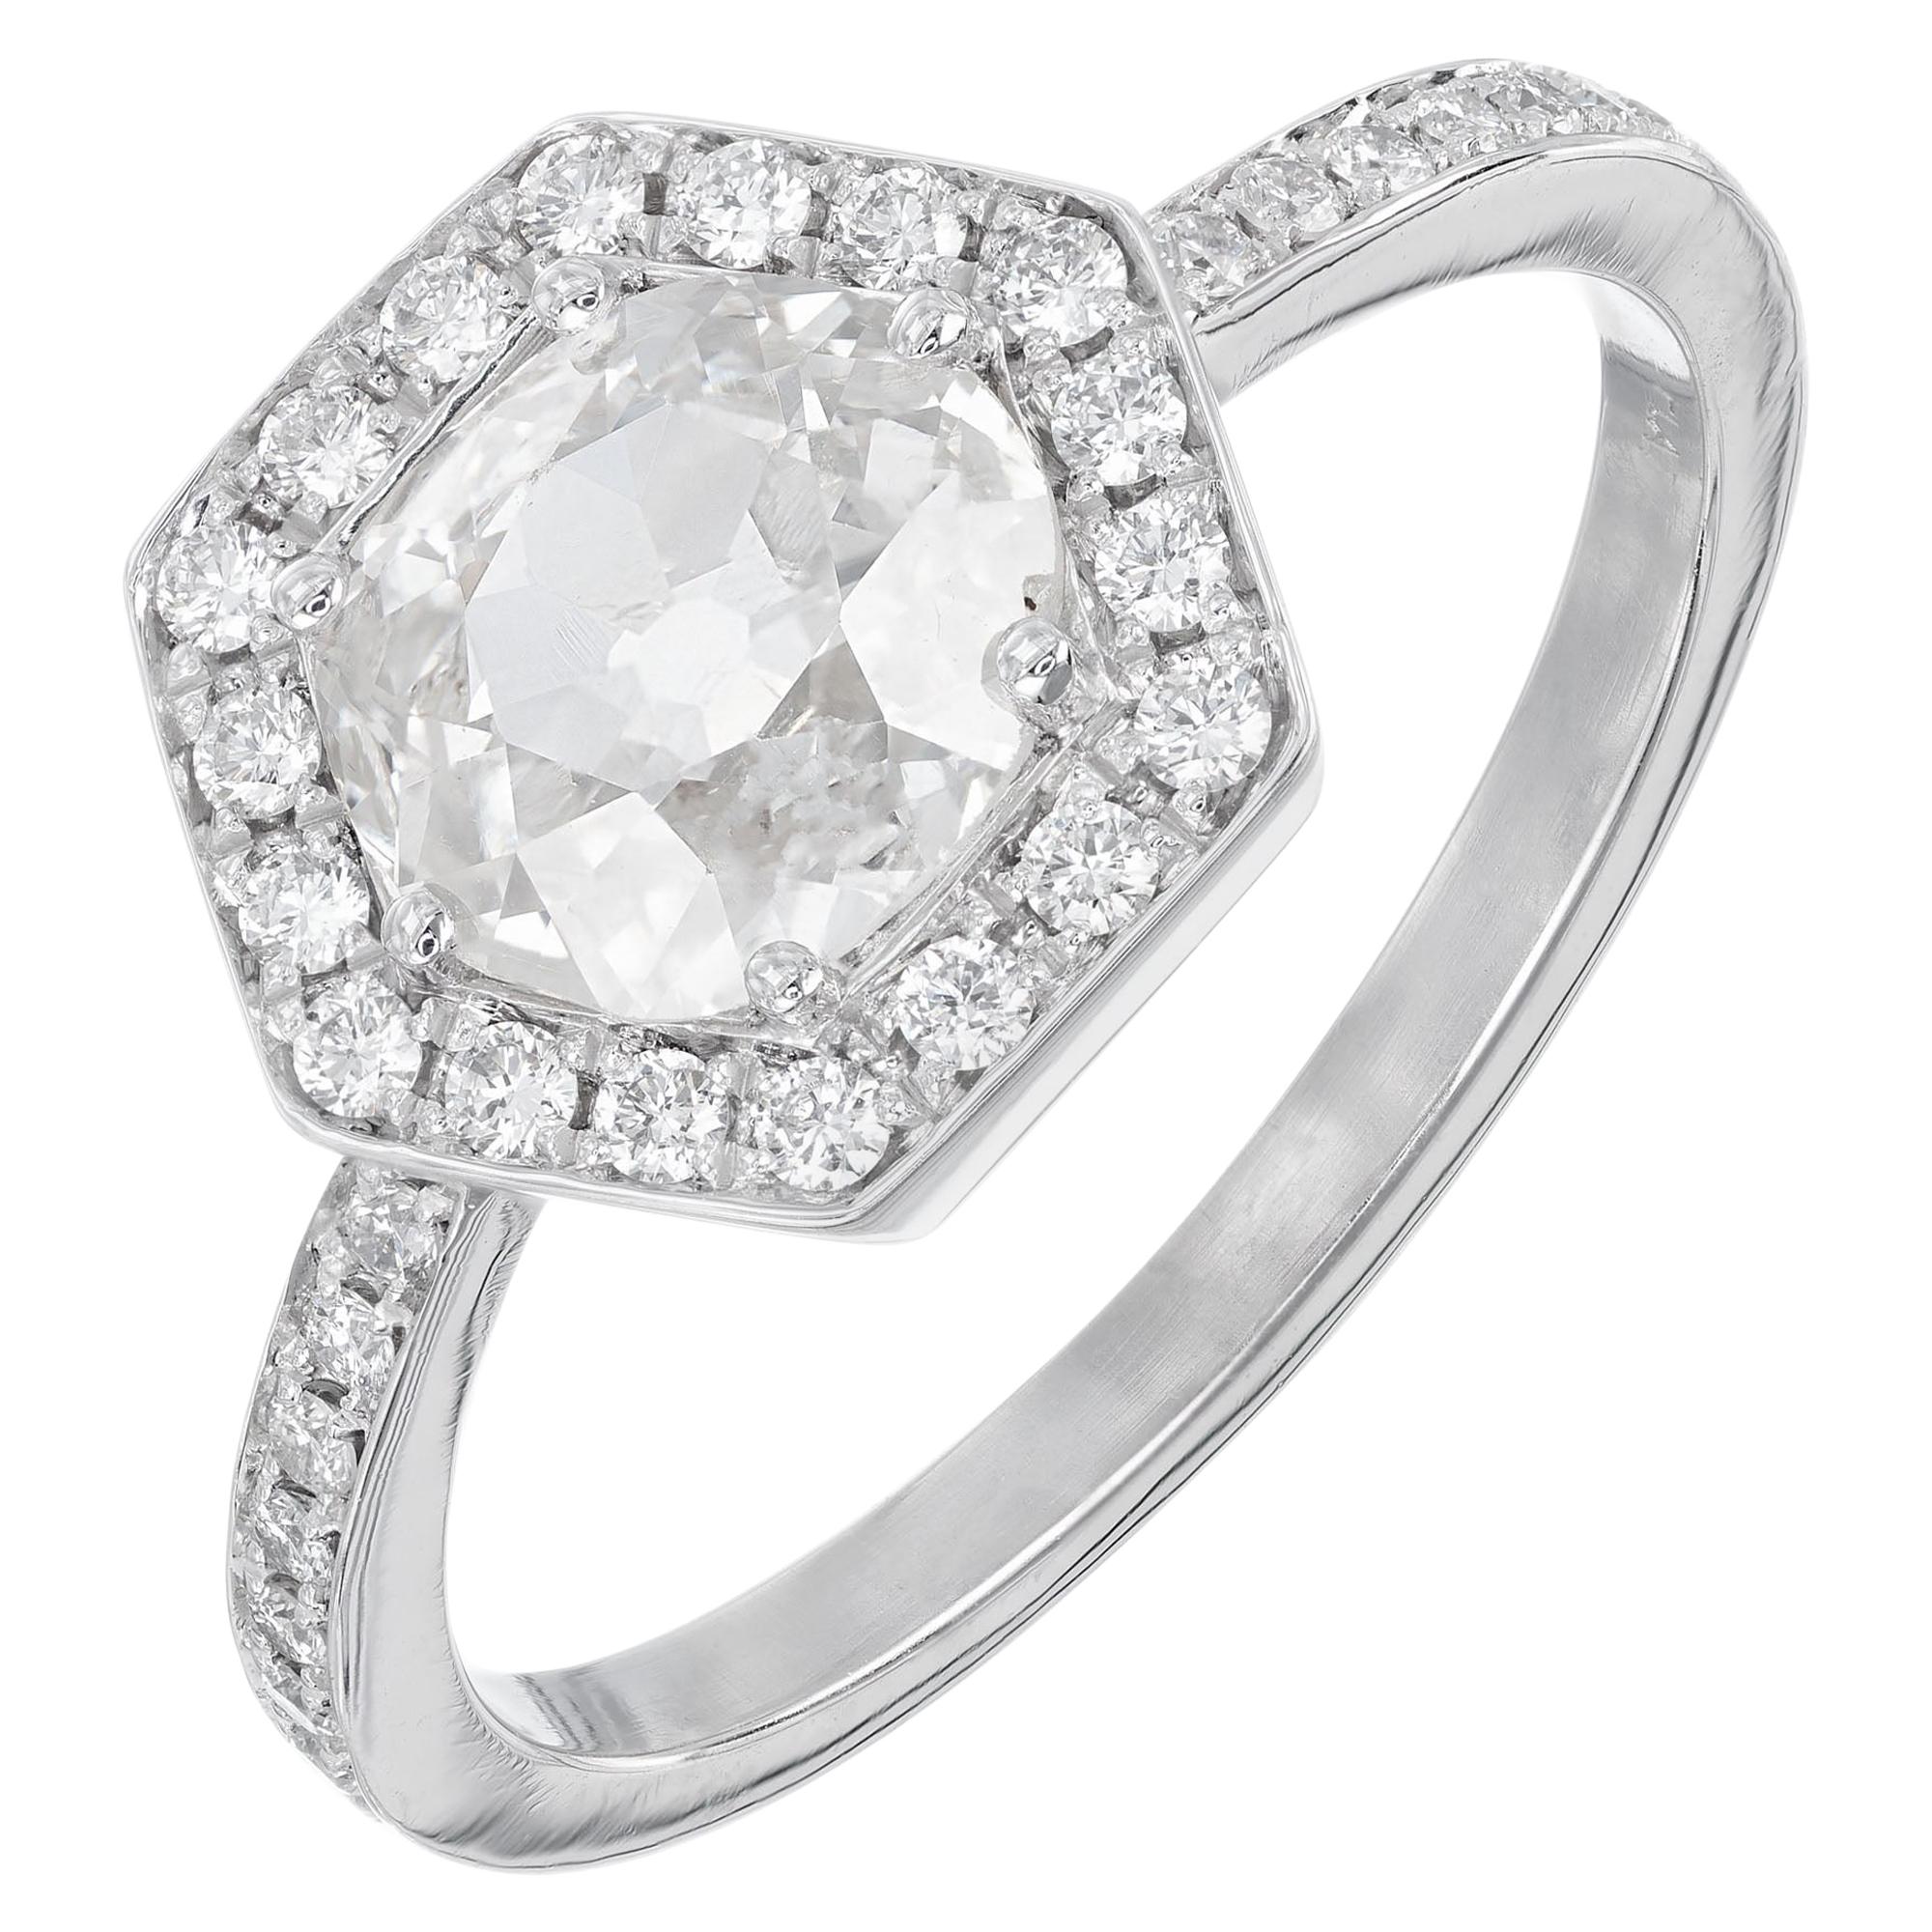 Peter Suchy GIA zertifiziert .99 Karat Diamant Halo Platin Verlobungsring